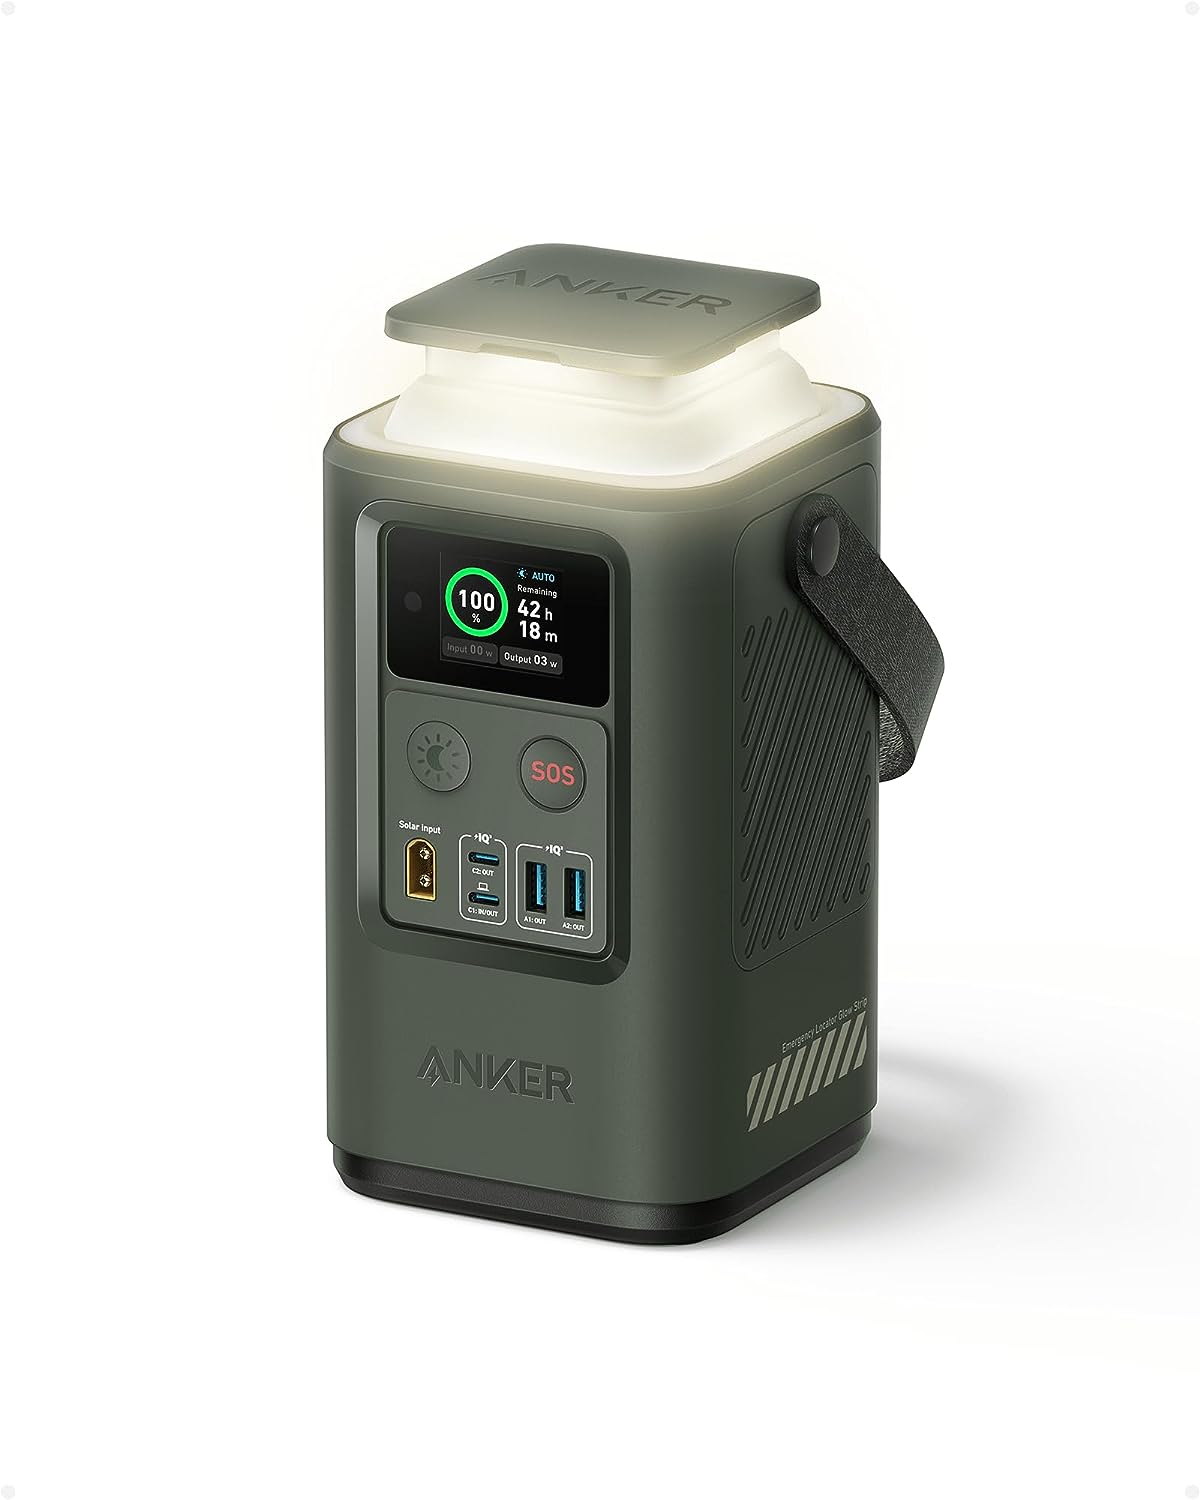 Anker 548 Power Bank (PowerCore Reserve 192Wh), 60,000mAh Portable